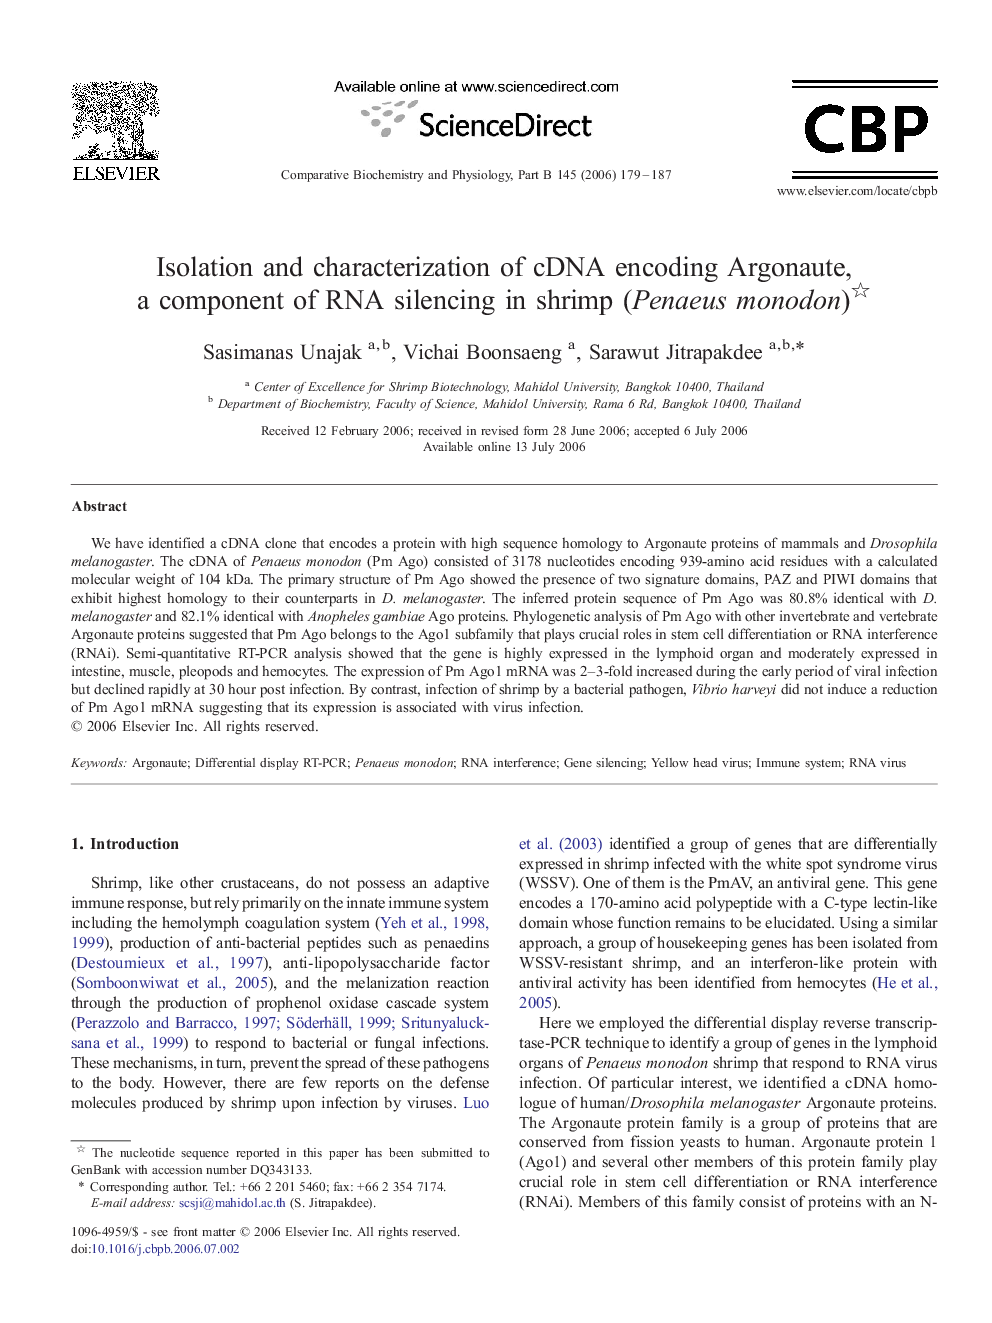 Isolation and characterization of cDNA encoding Argonaute, a component of RNA silencing in shrimp (Penaeus monodon)